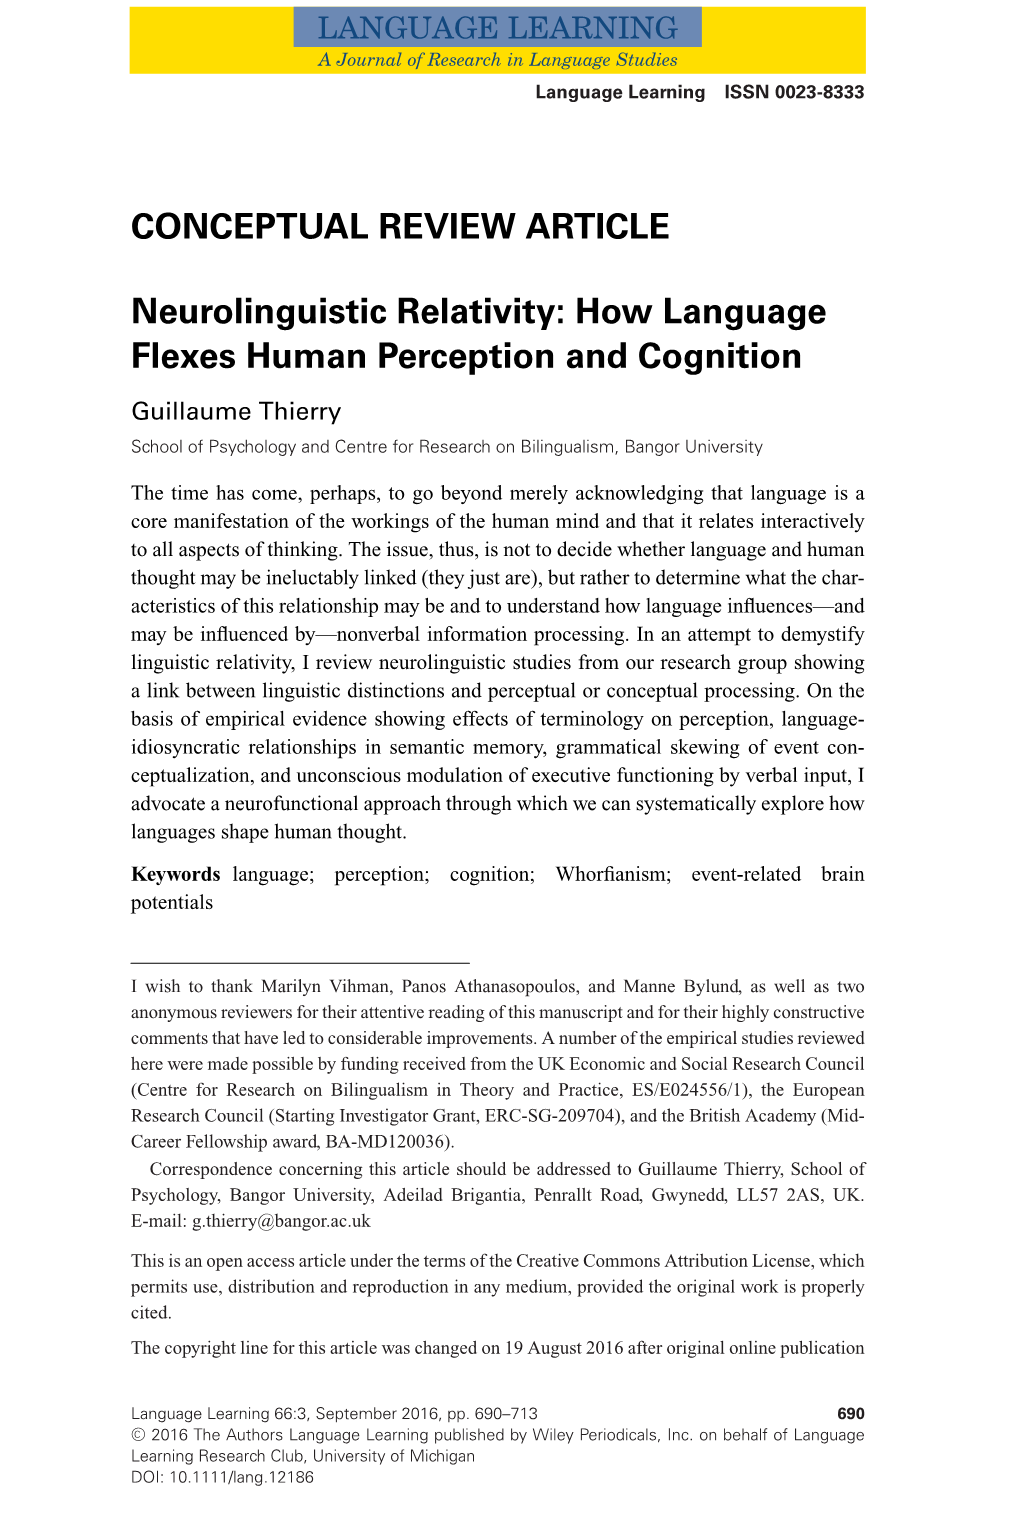 Neurolinguistic Relativity: How Language Flexes Human Perception and Cognition